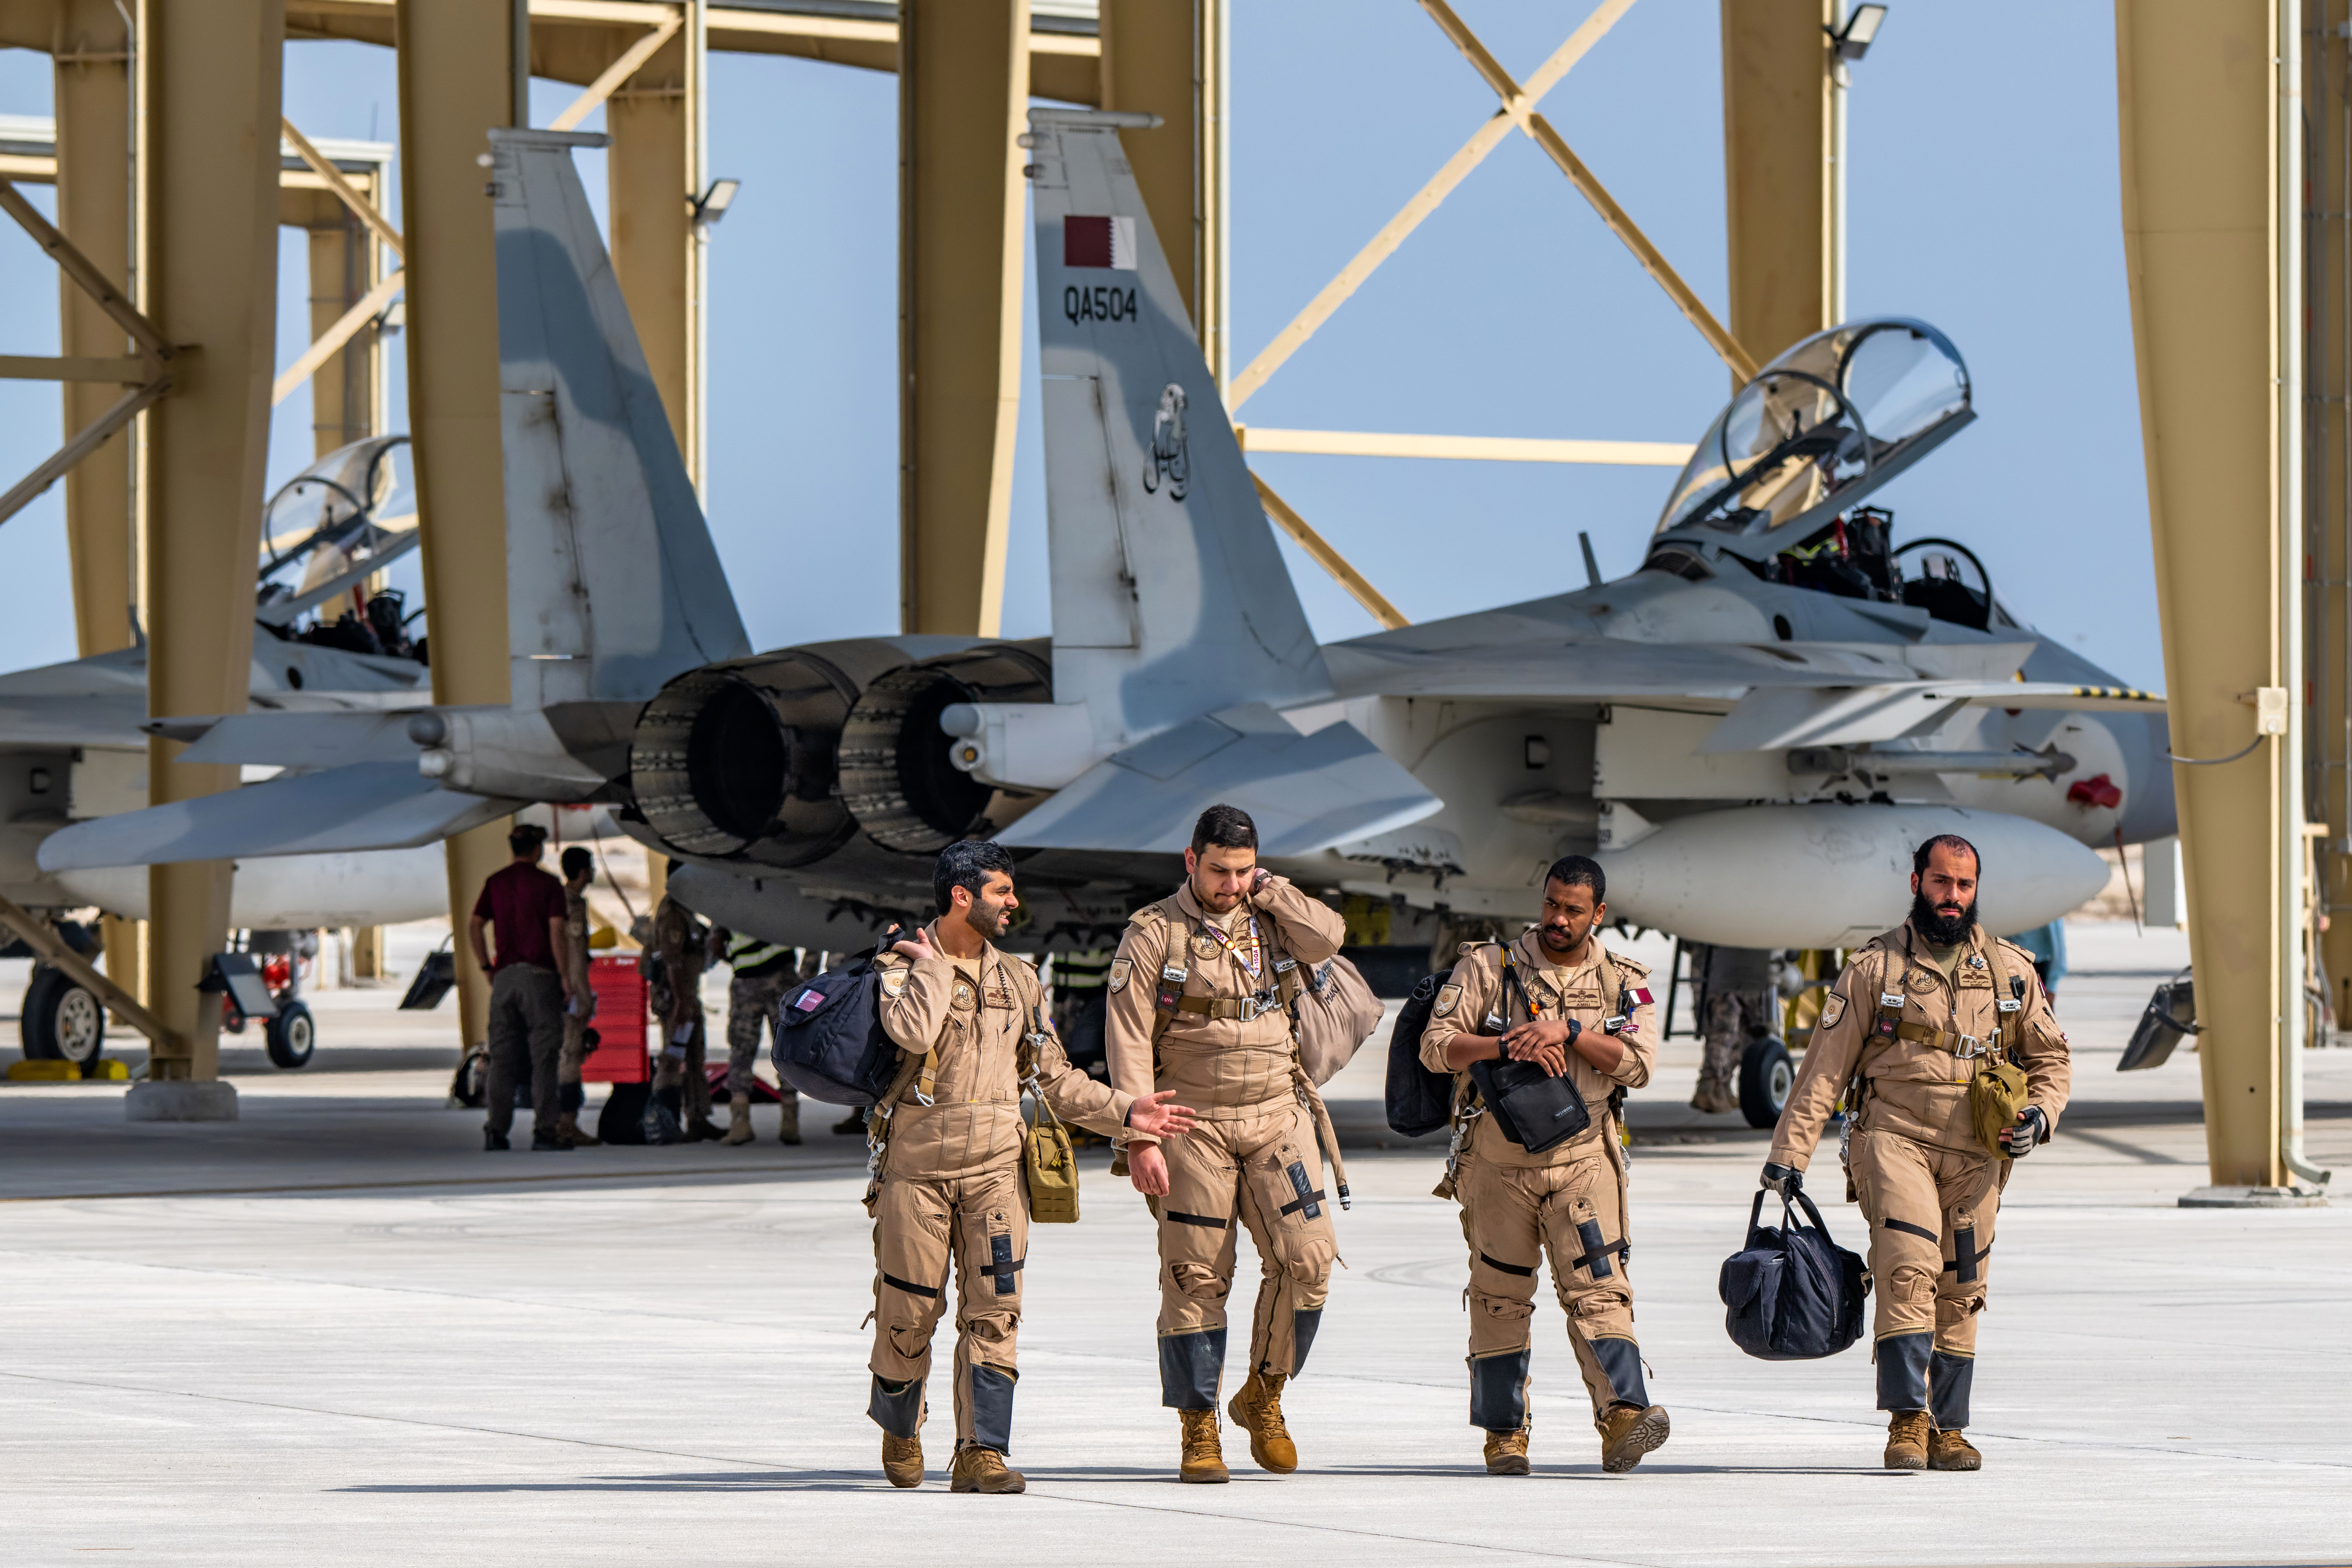 Qatari aircrew walk in after a sortie